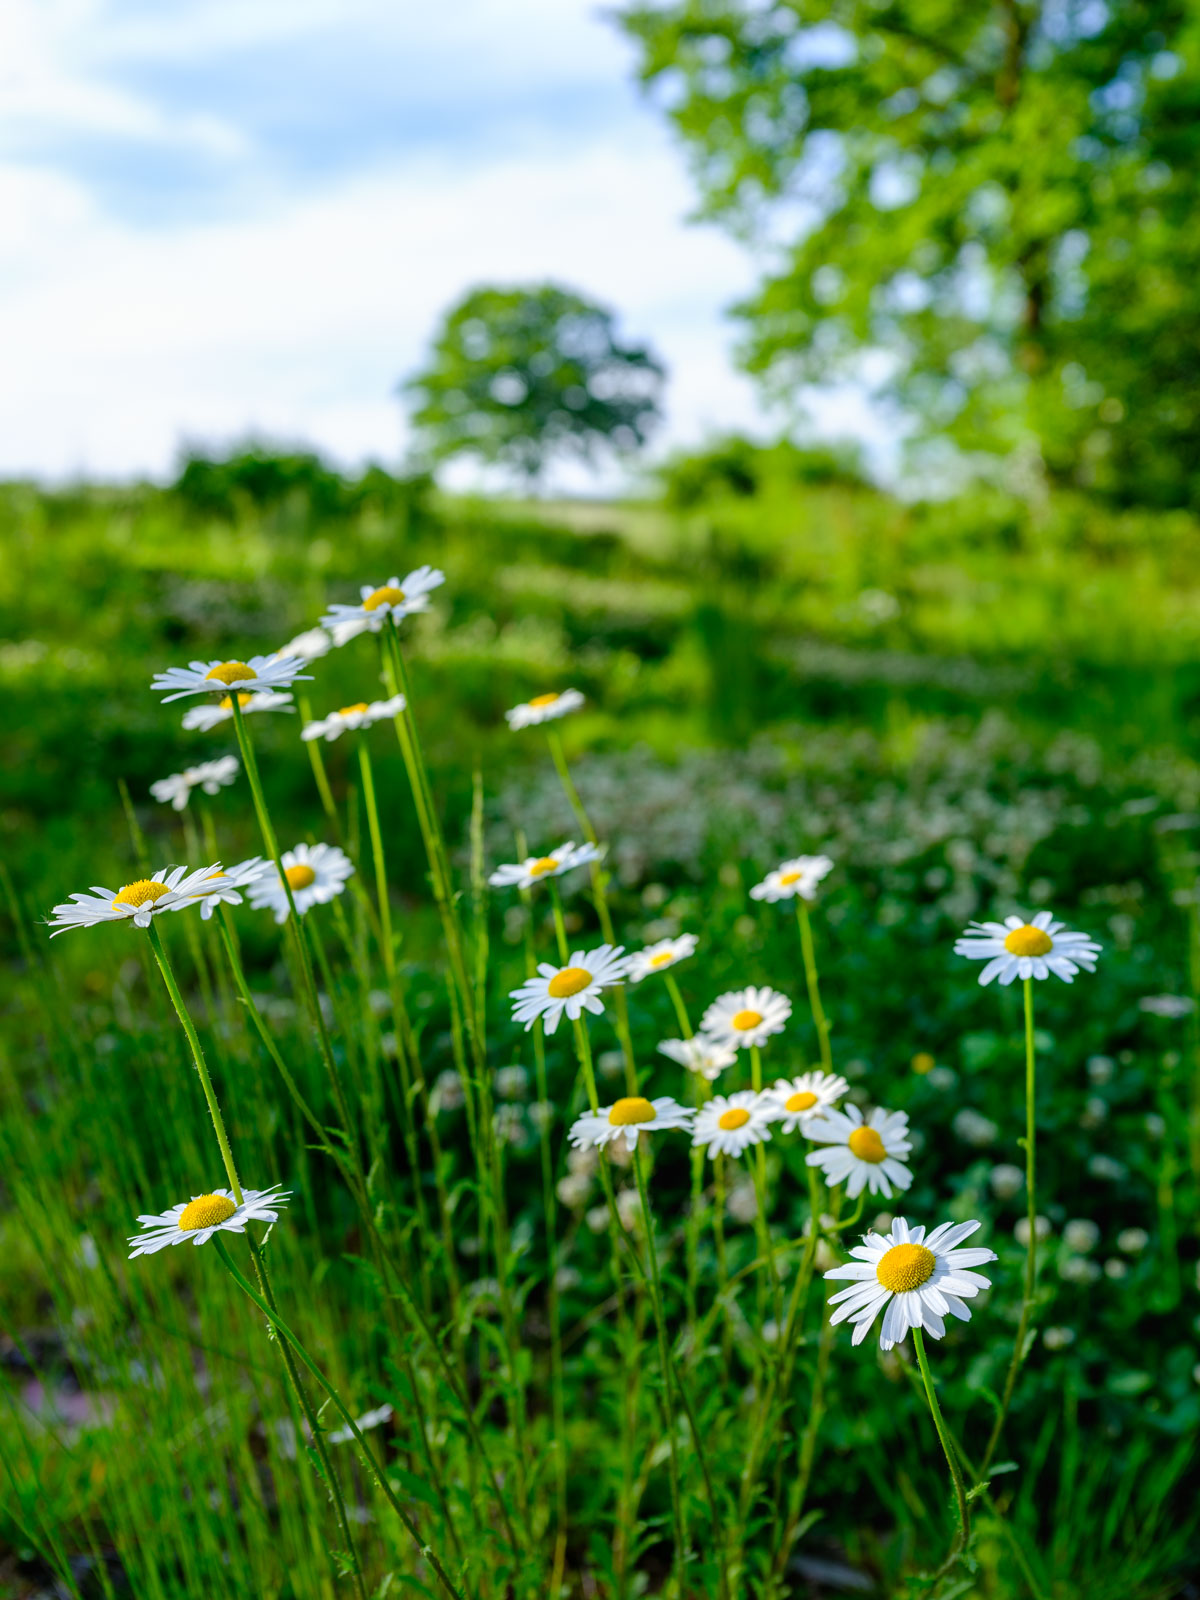 Ox-eye daisies (Leucanthemum vulgare) in a field near Bielefeld-Theesen (Germany).